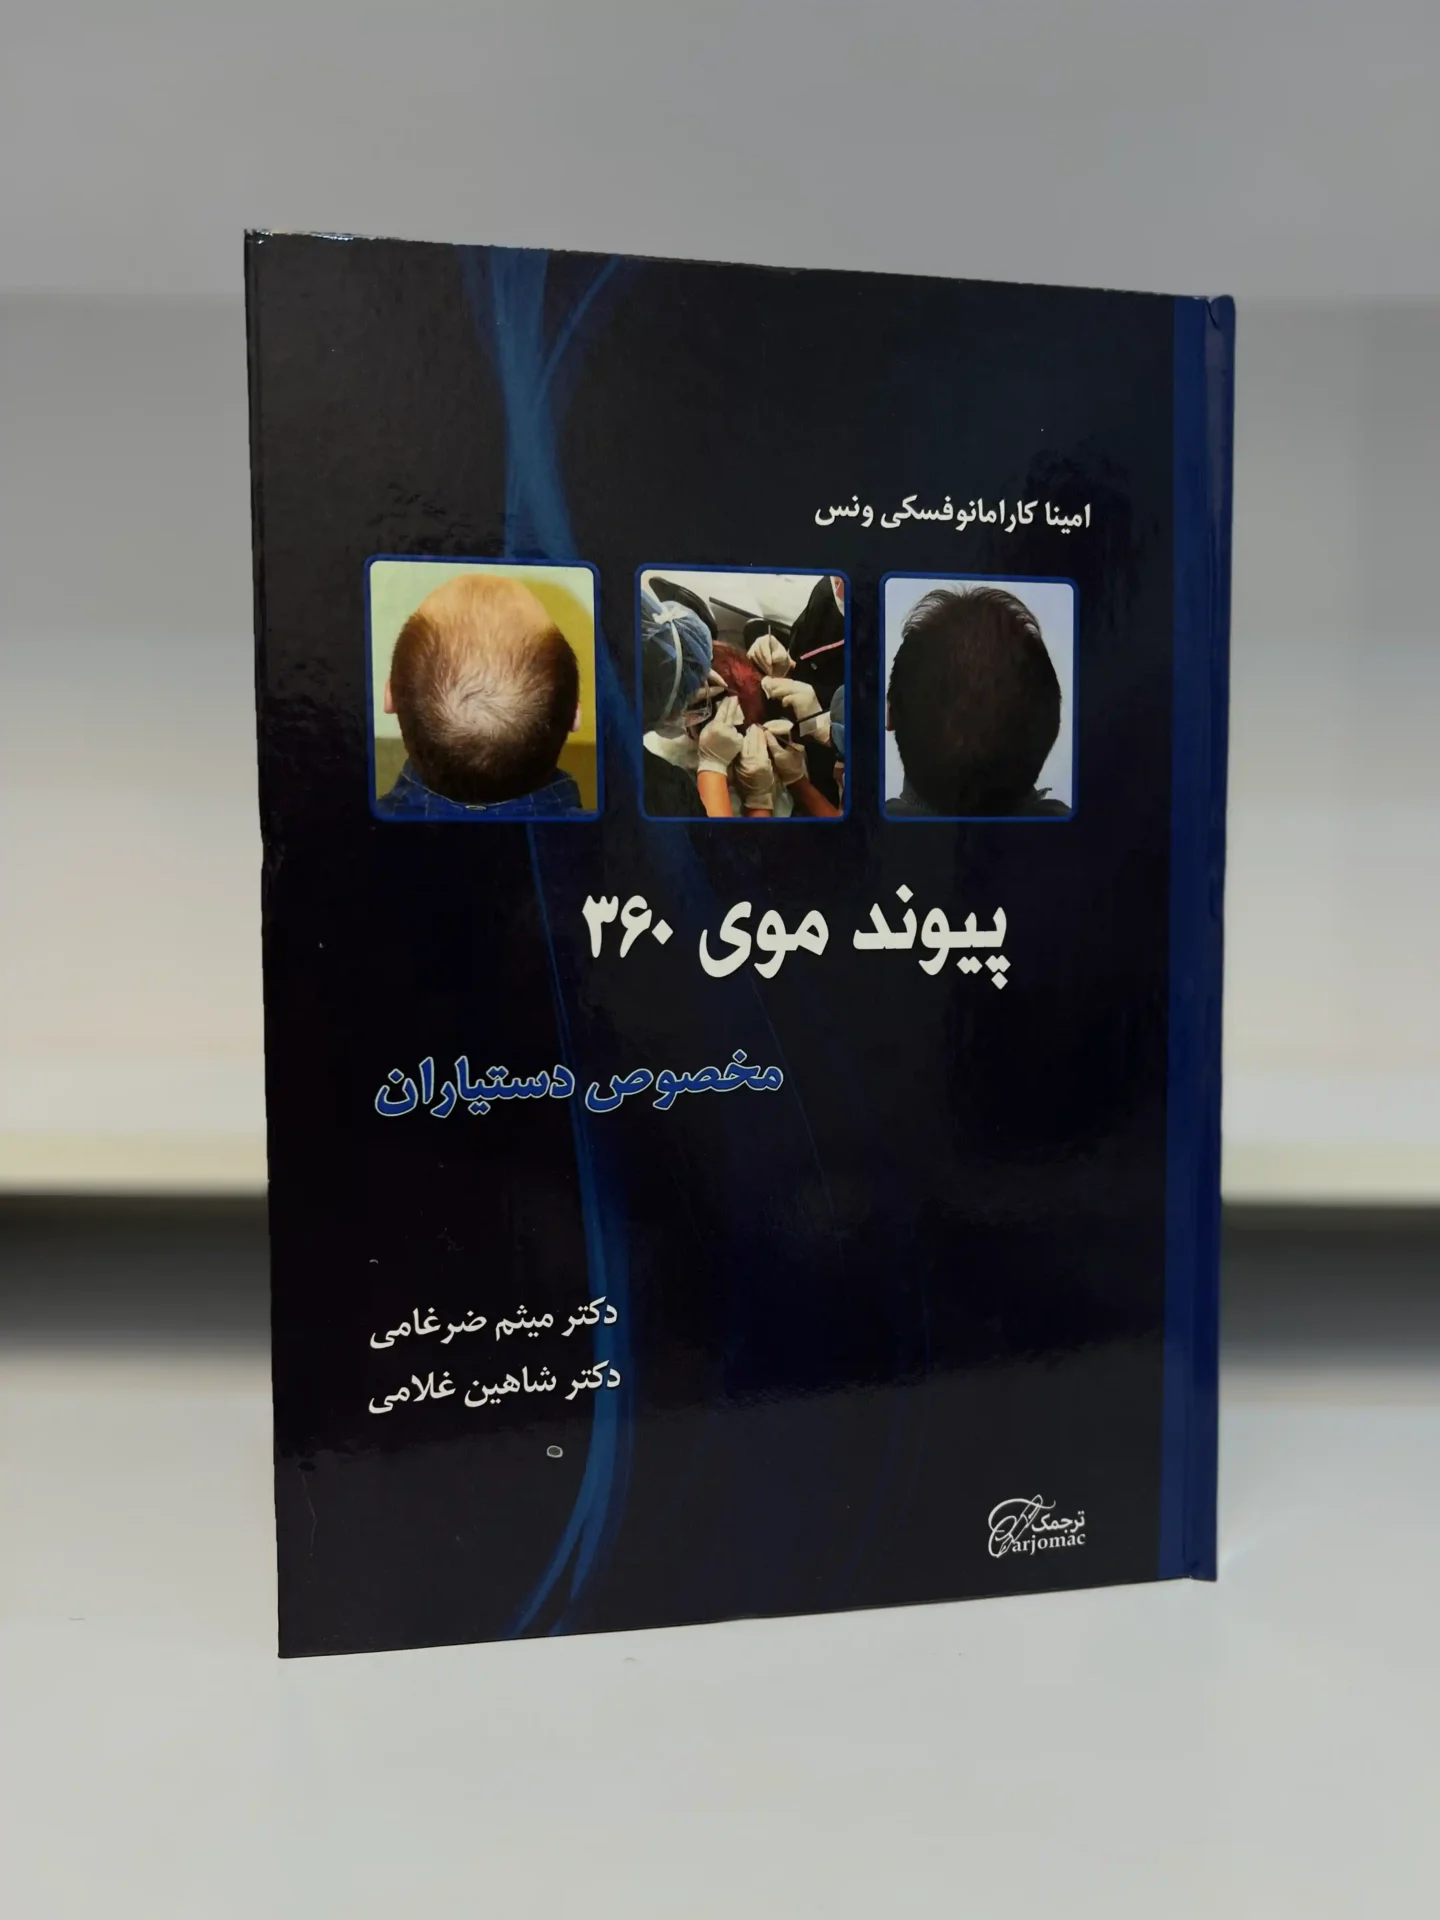 360 hair transplant book by Dr. Zarghami